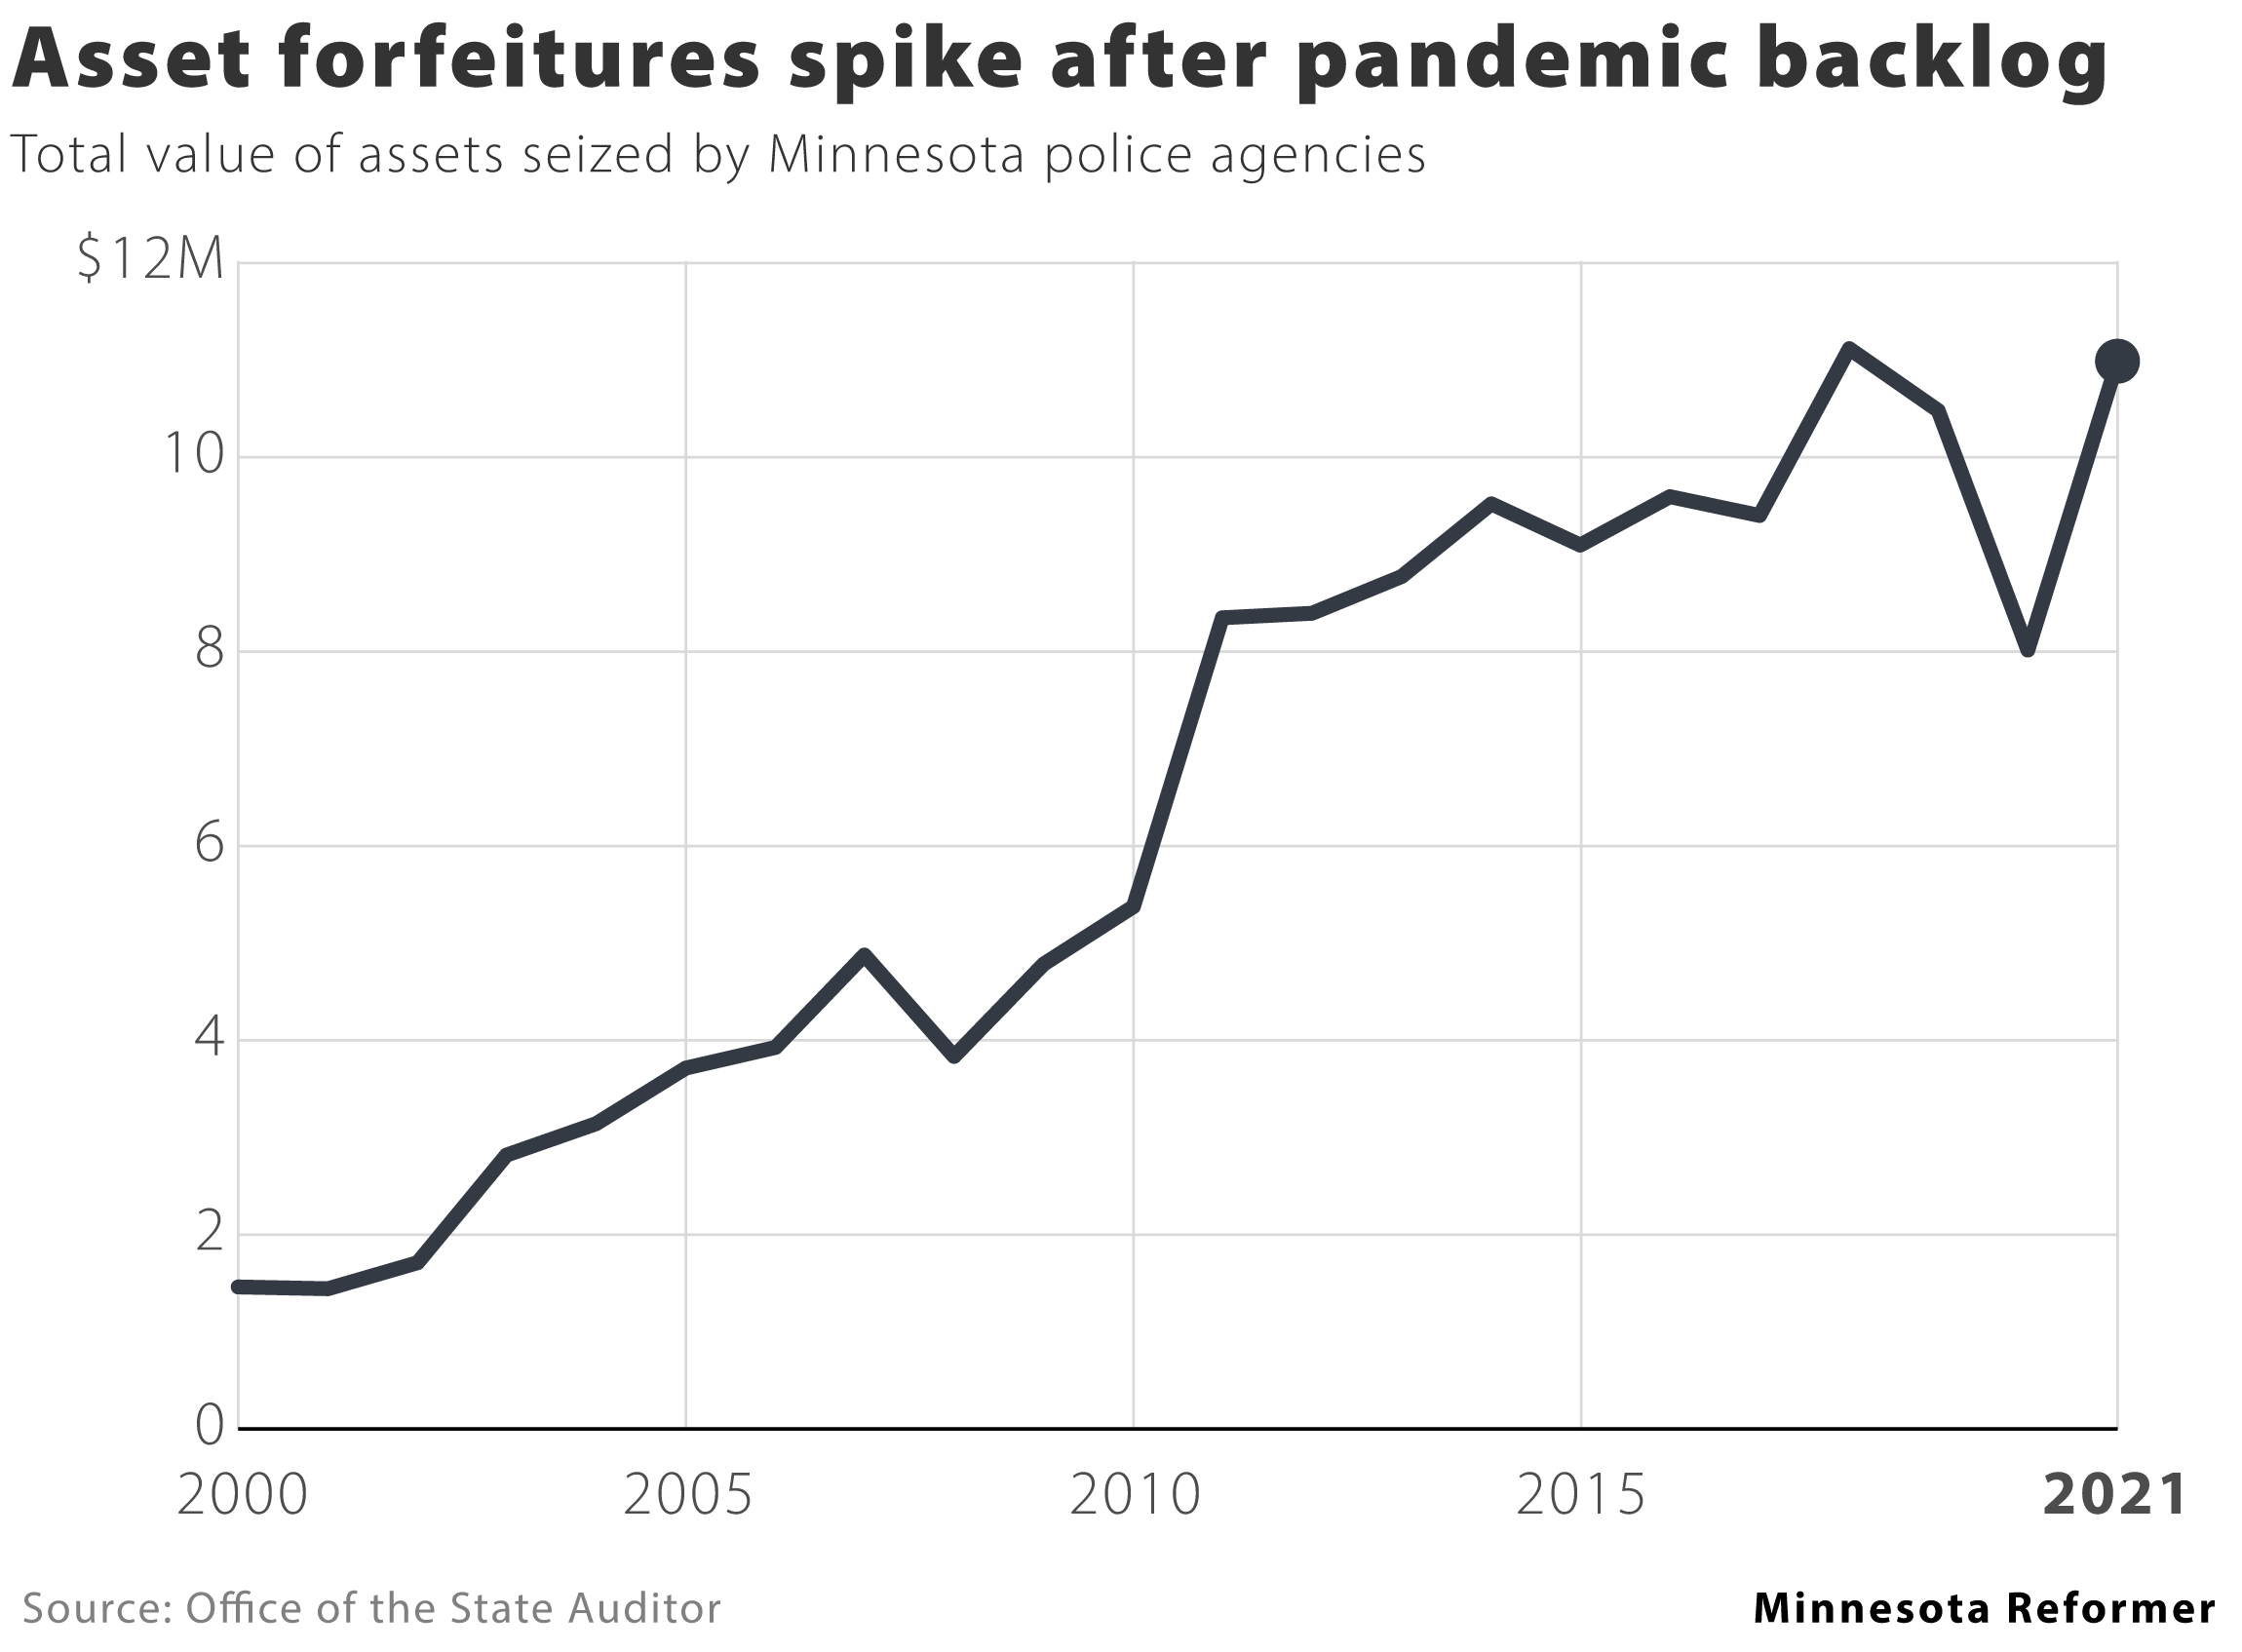 Minnesota forfeiture over time